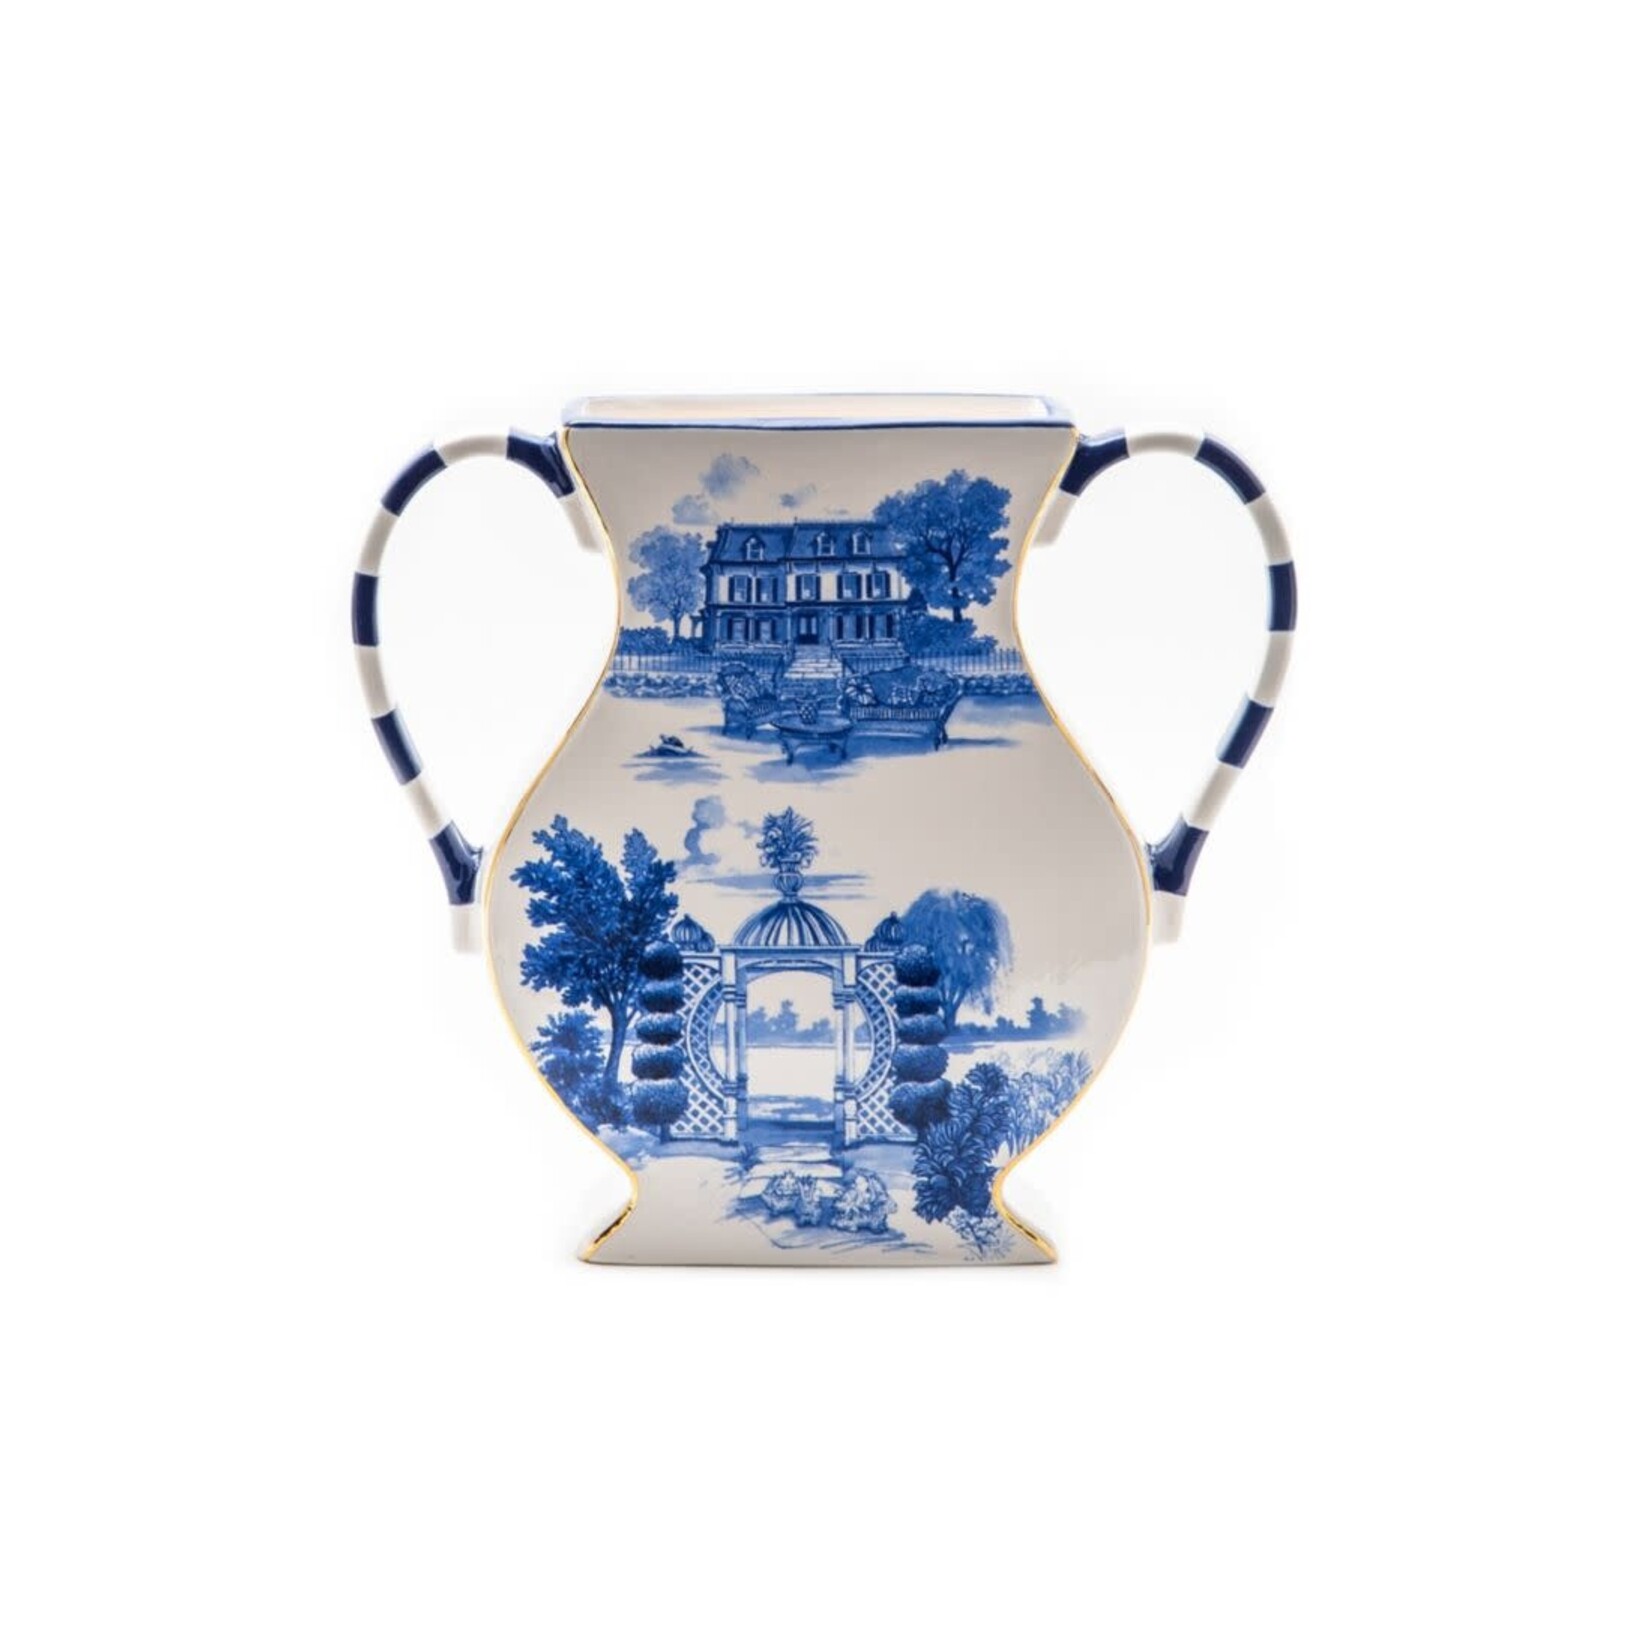 MacKenzie-Childs Royal Toile Vase